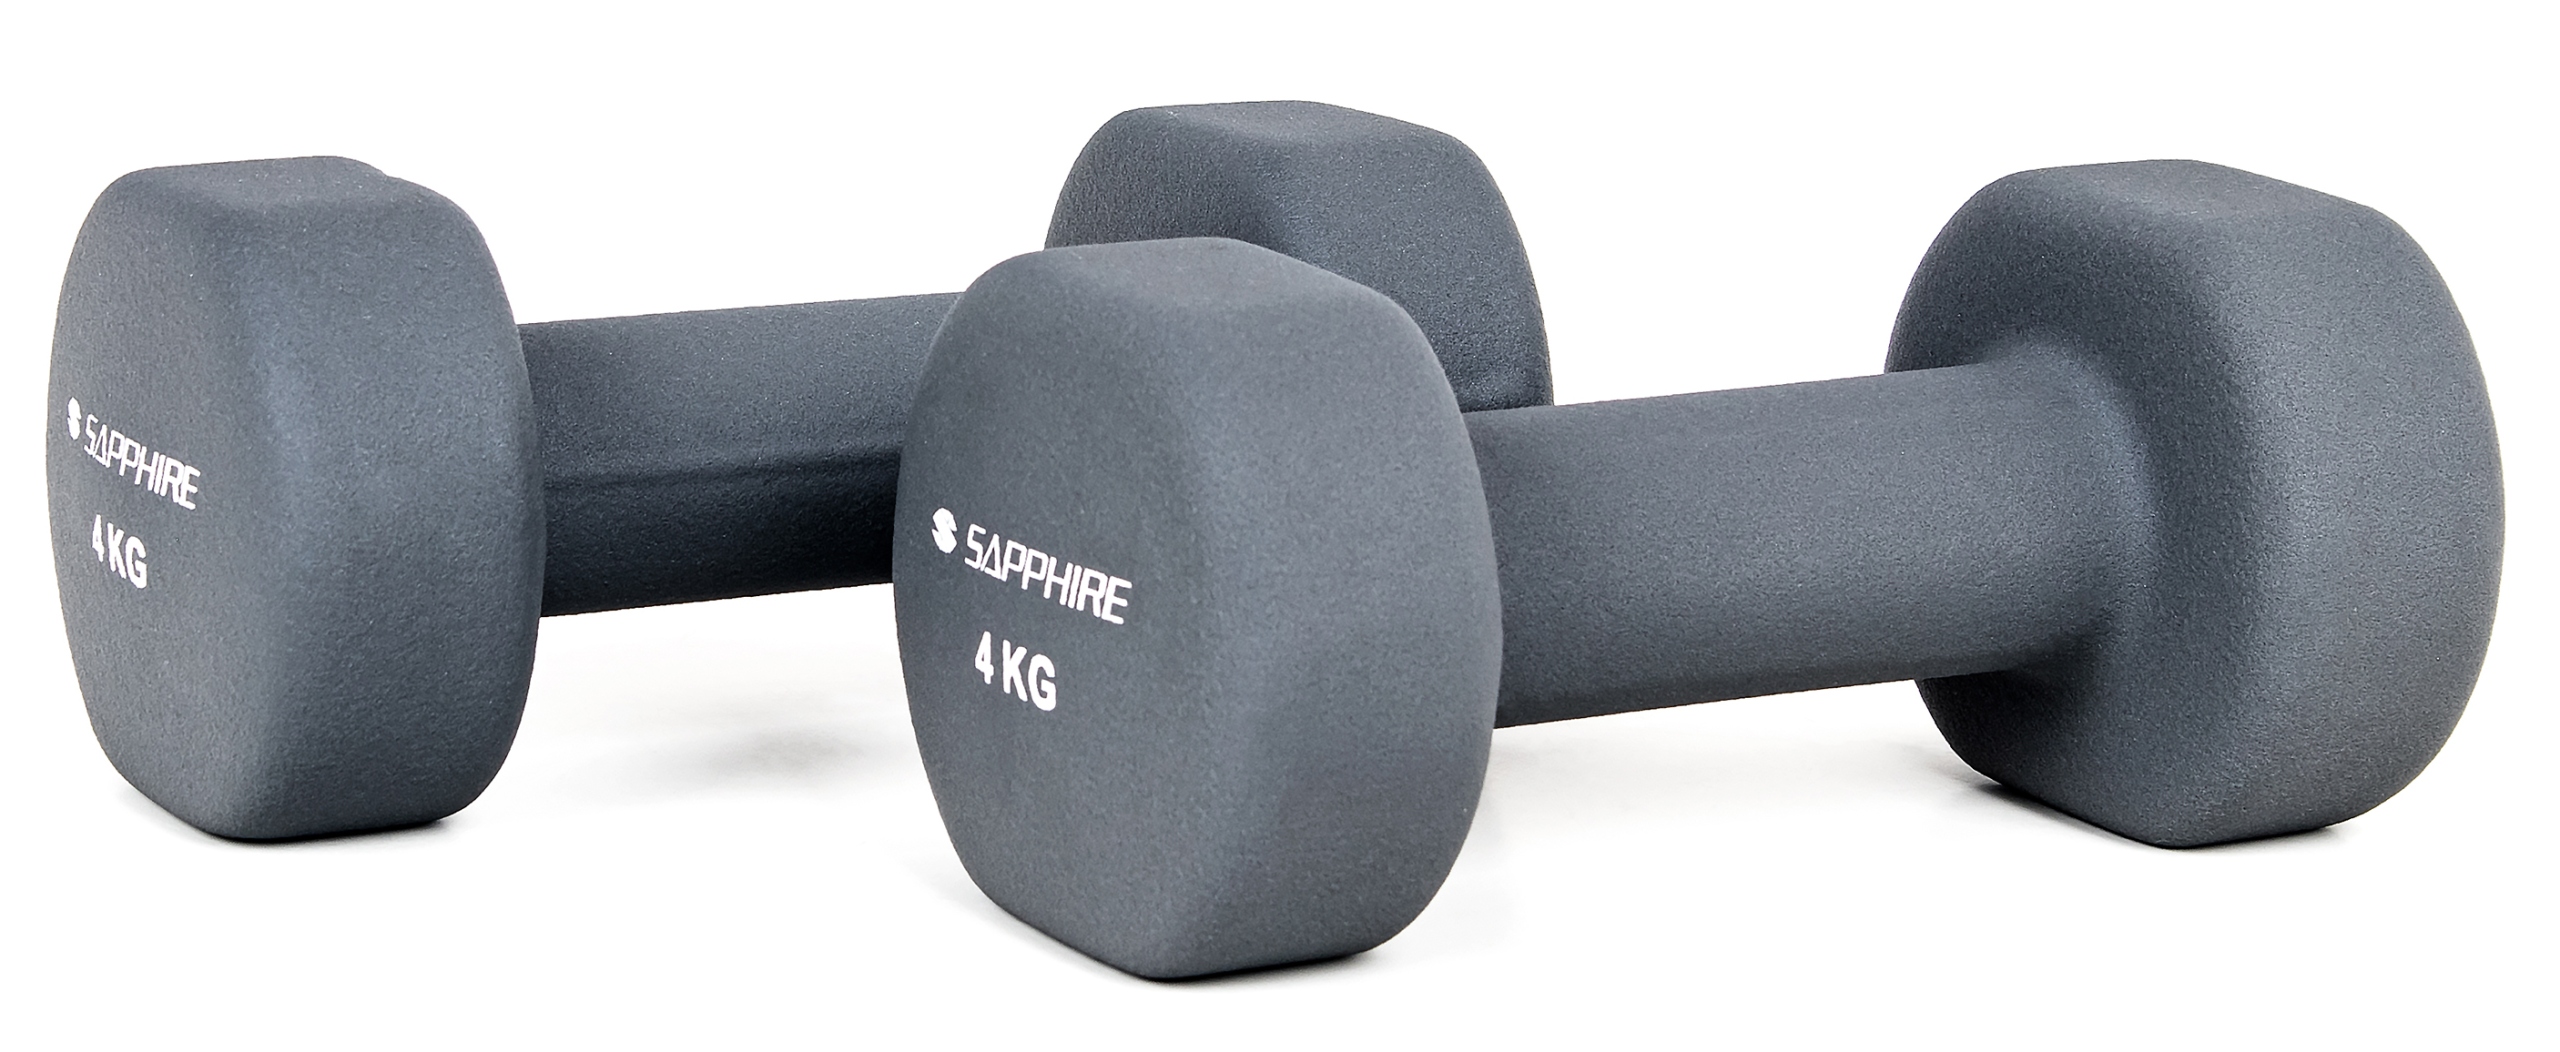 Hantelki fitness Sapphire SG-1VL 2x1 kg